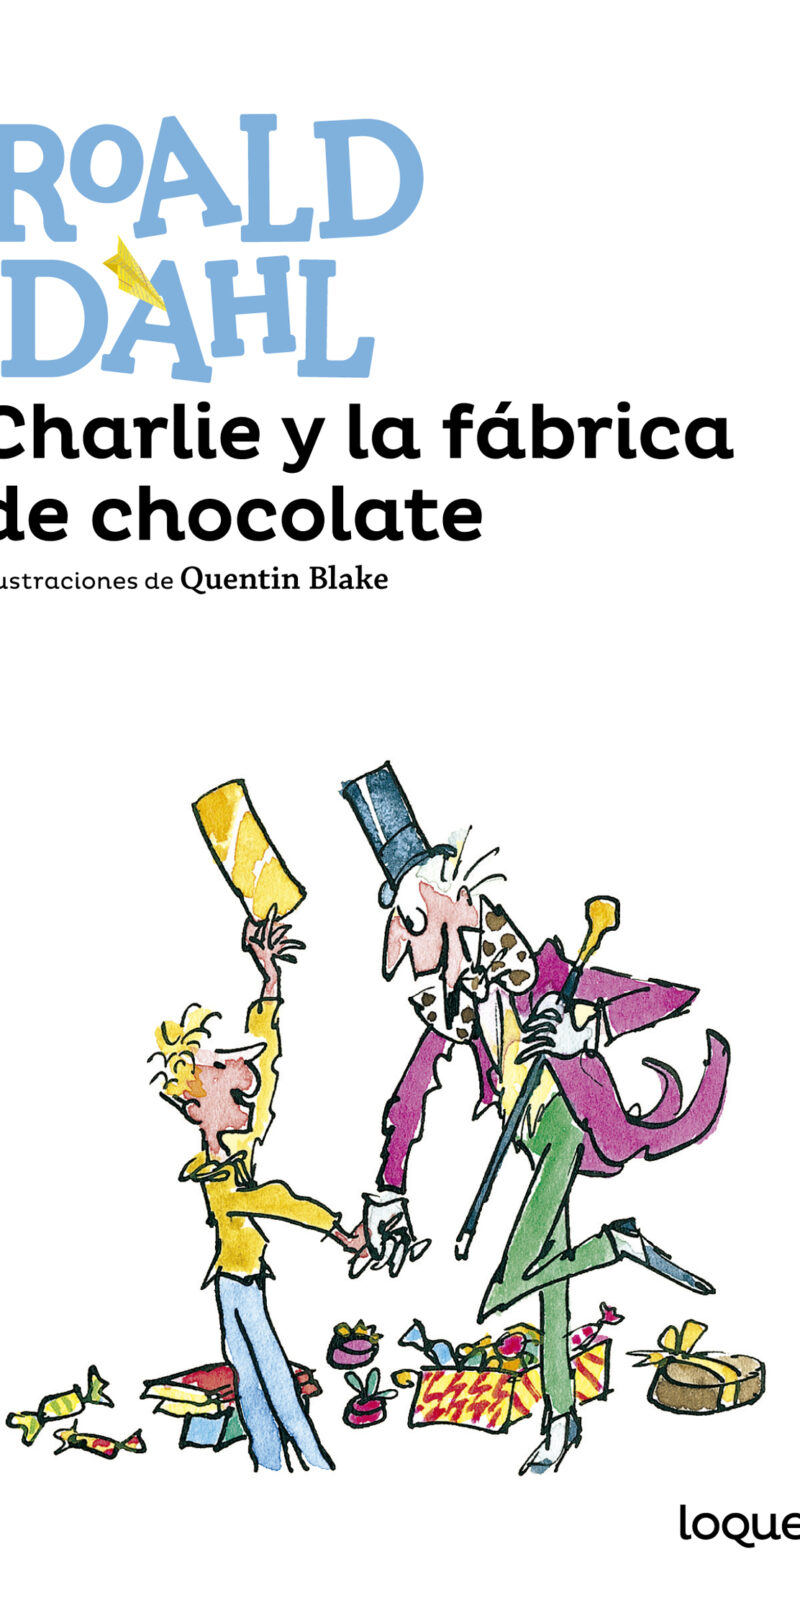 Charlie y fábrica chocolate